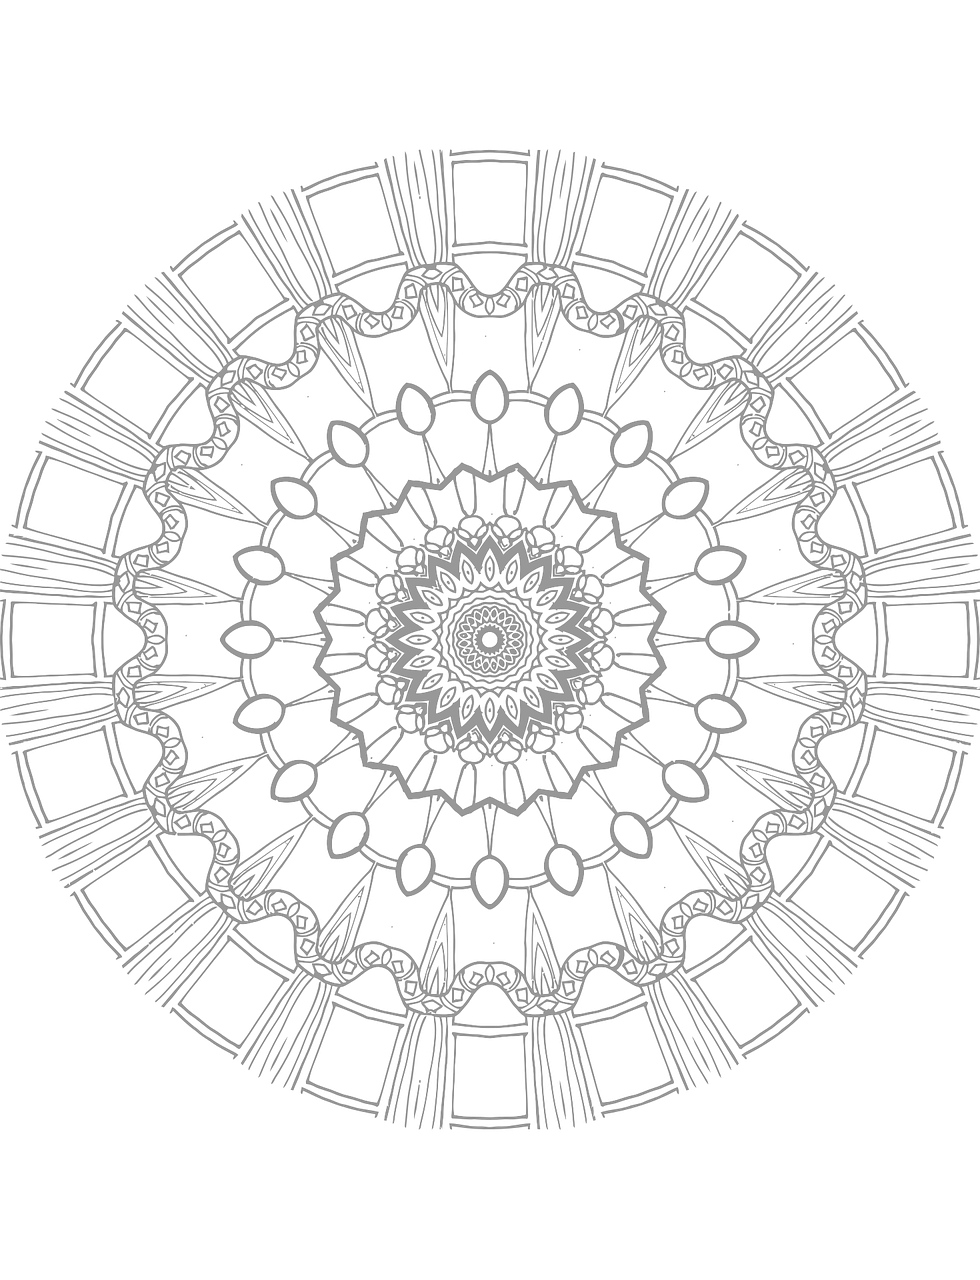 Mandala Coloring Page - Free vector graphic on Pixabay